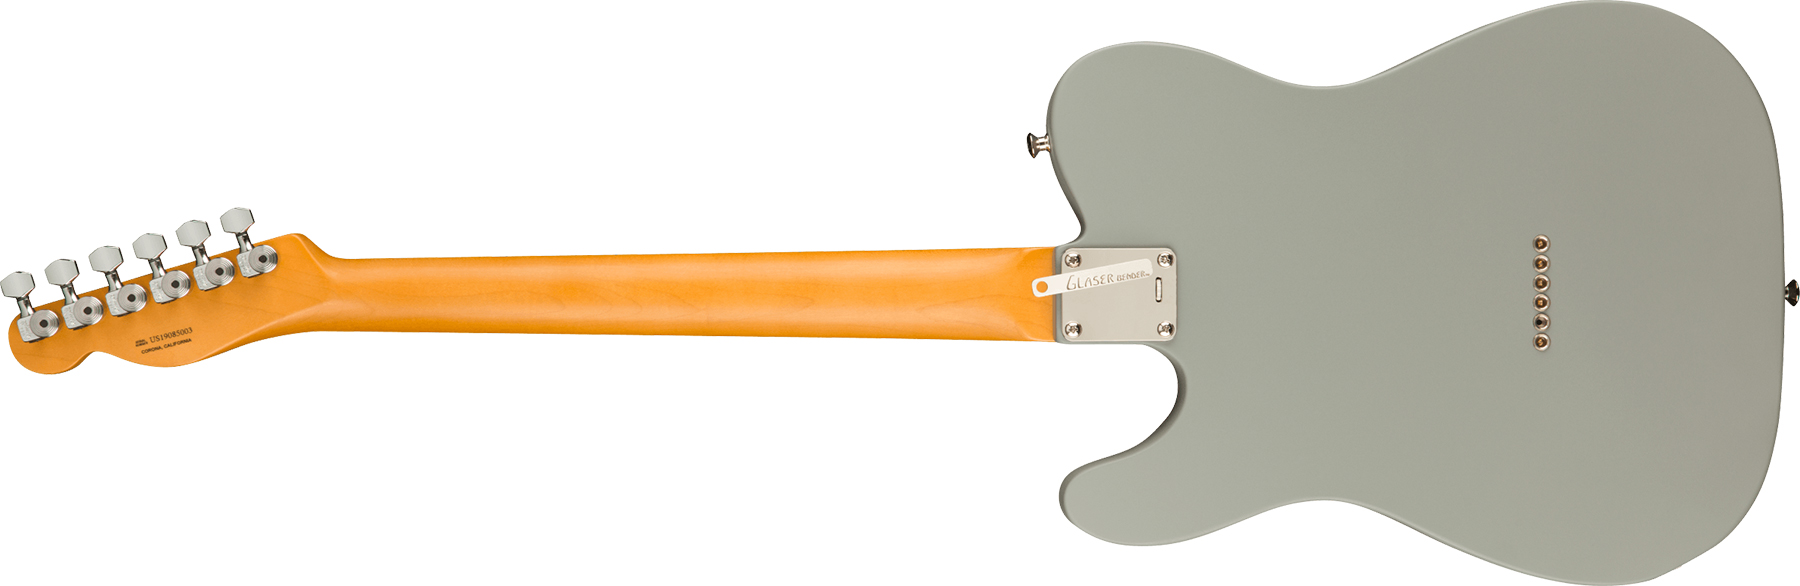 Fender Brent Mason Tele Signature Usa Ssh B-bender Mn - Primer Gray - Televorm elektrische gitaar - Variation 1